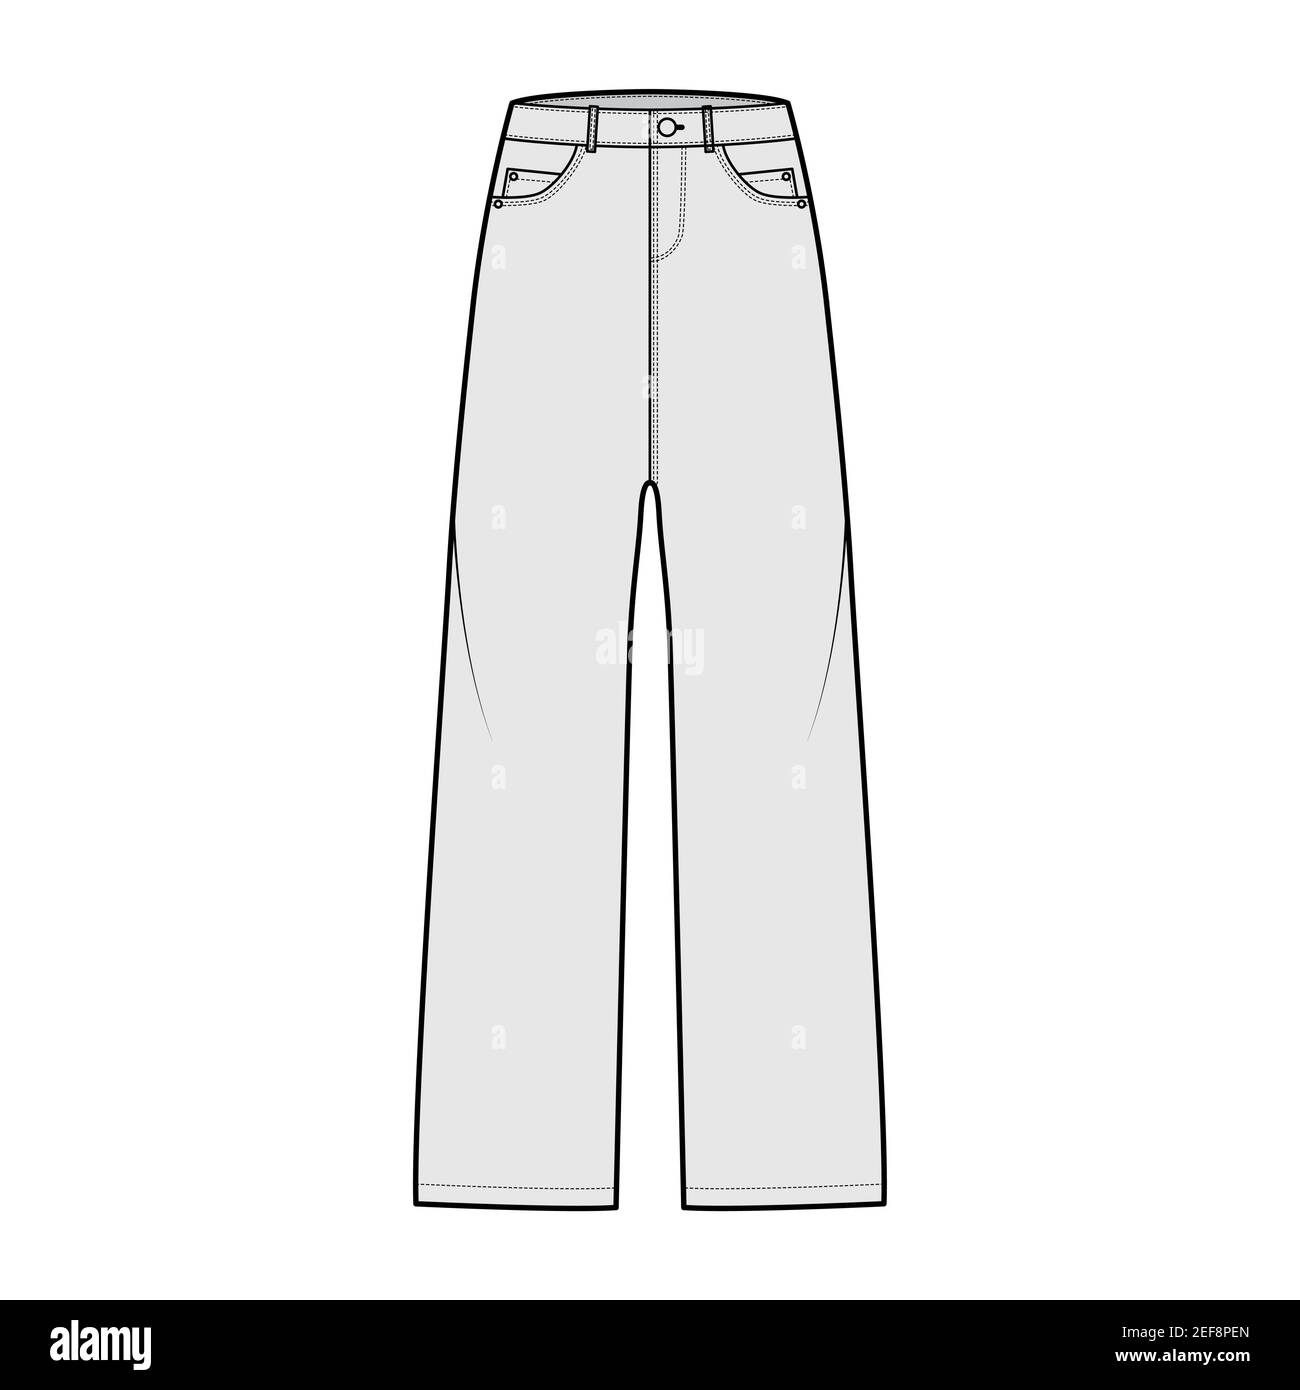 Baggy Jeans Denim pants technical fashion illustration with full length,  waist, rise, 5 pockets, Rivets, belt